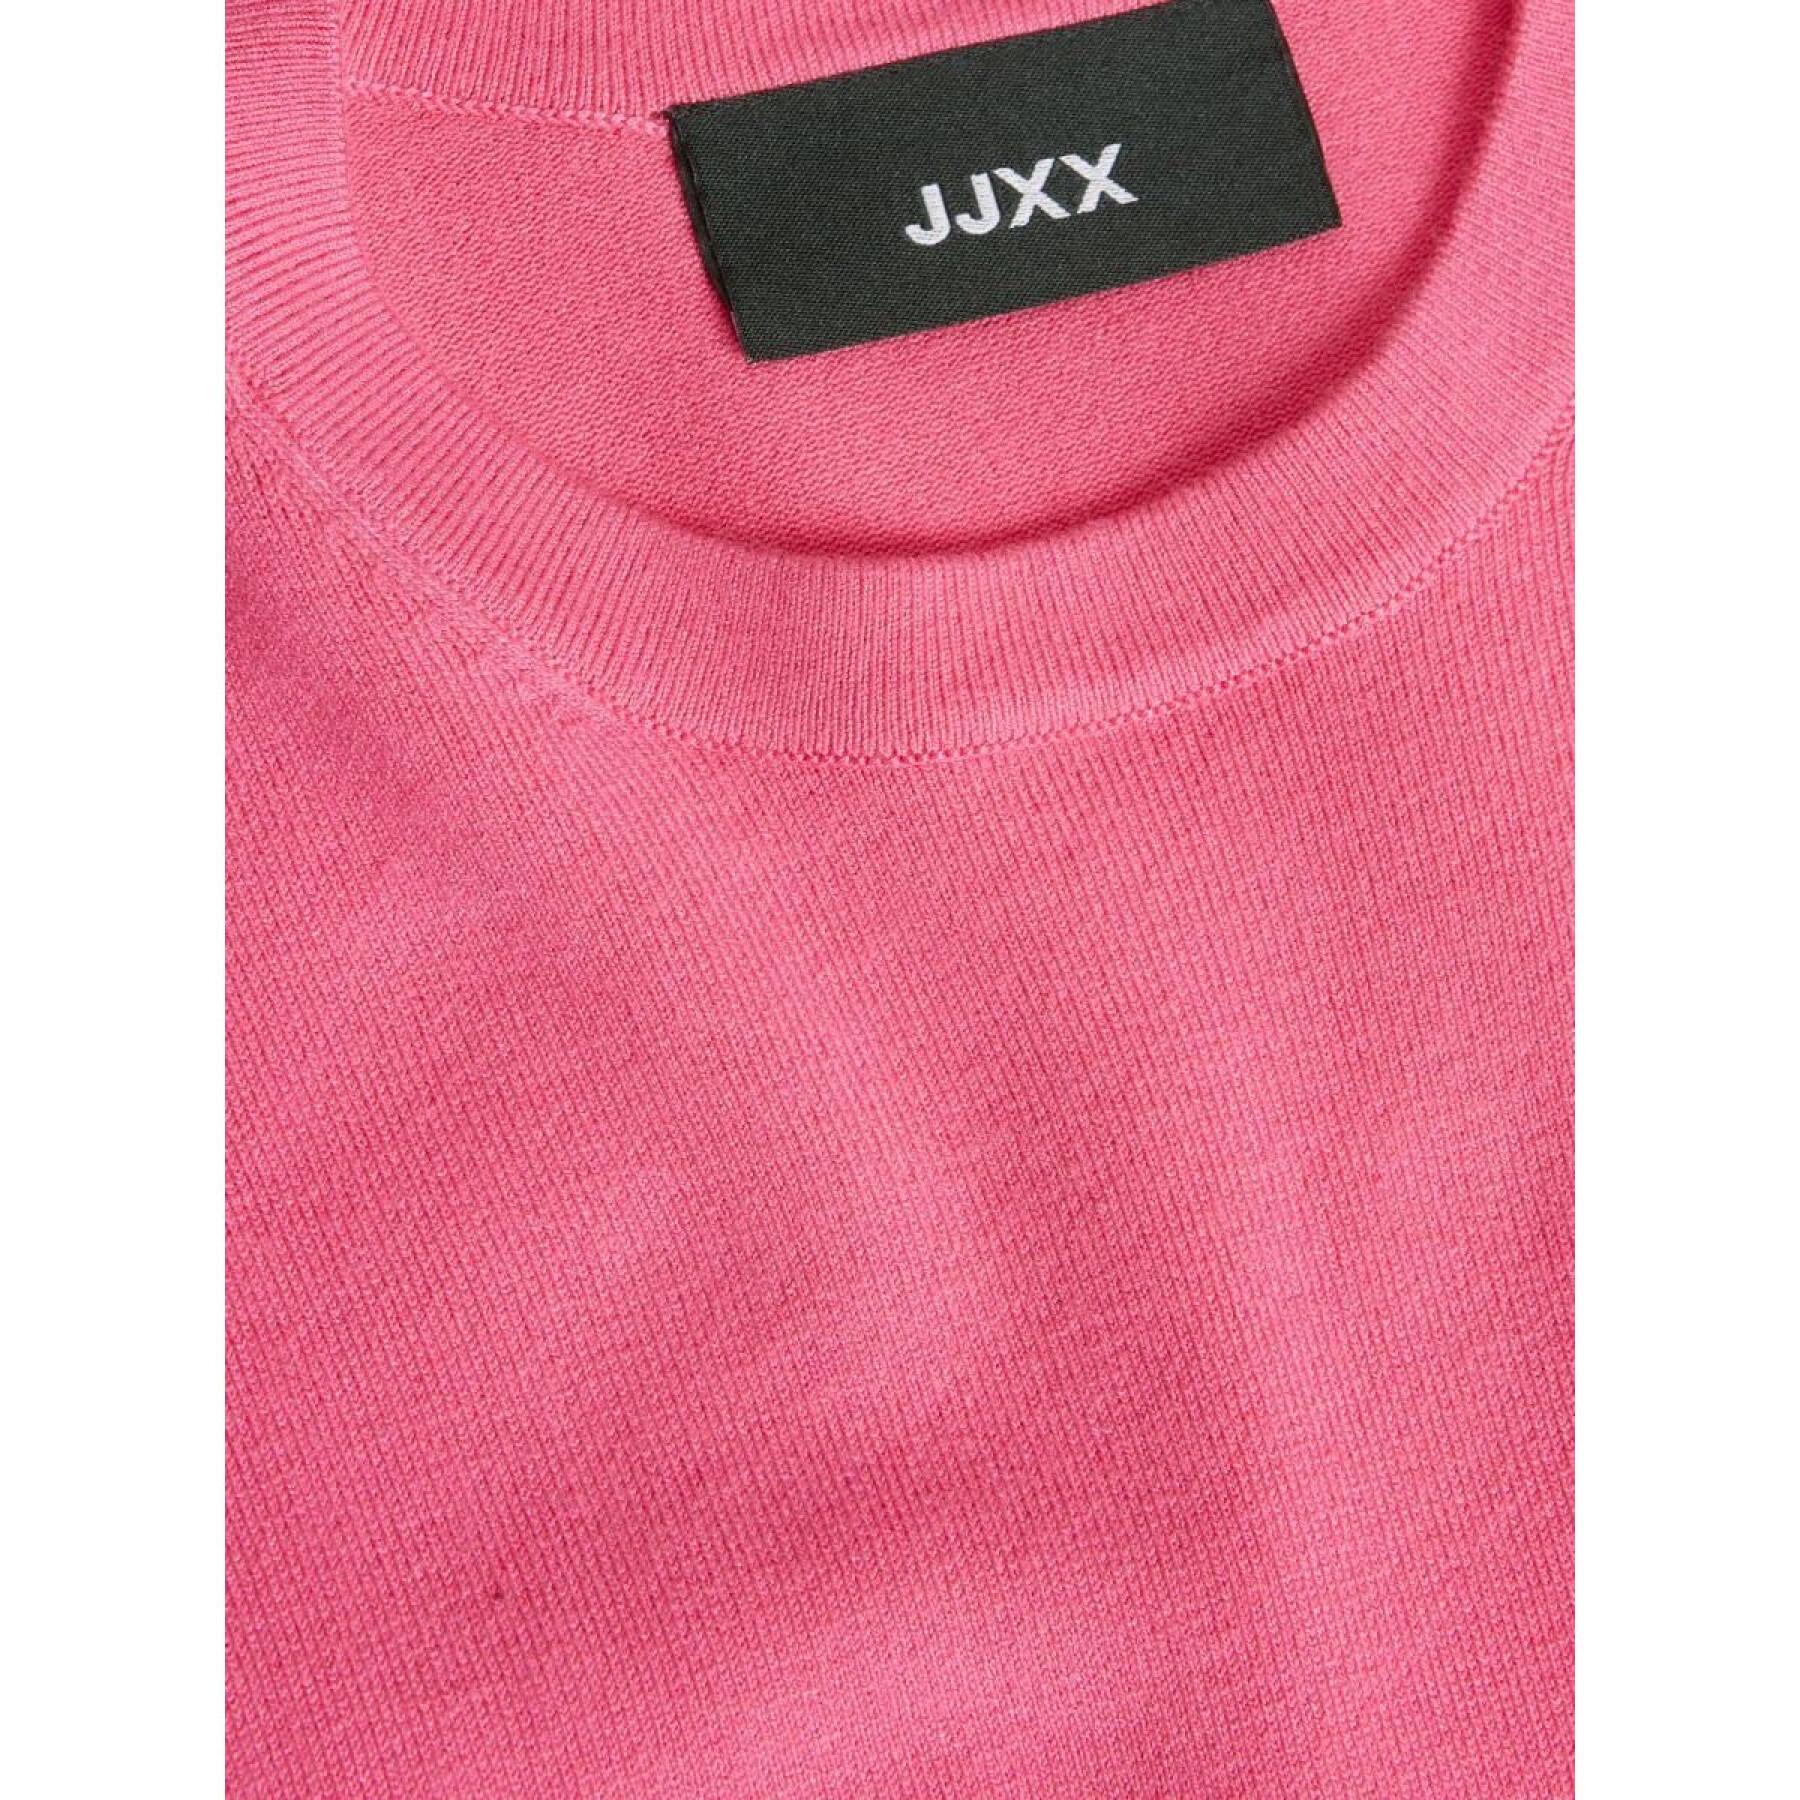 Women's round neck sweater JJXX Lara Soft